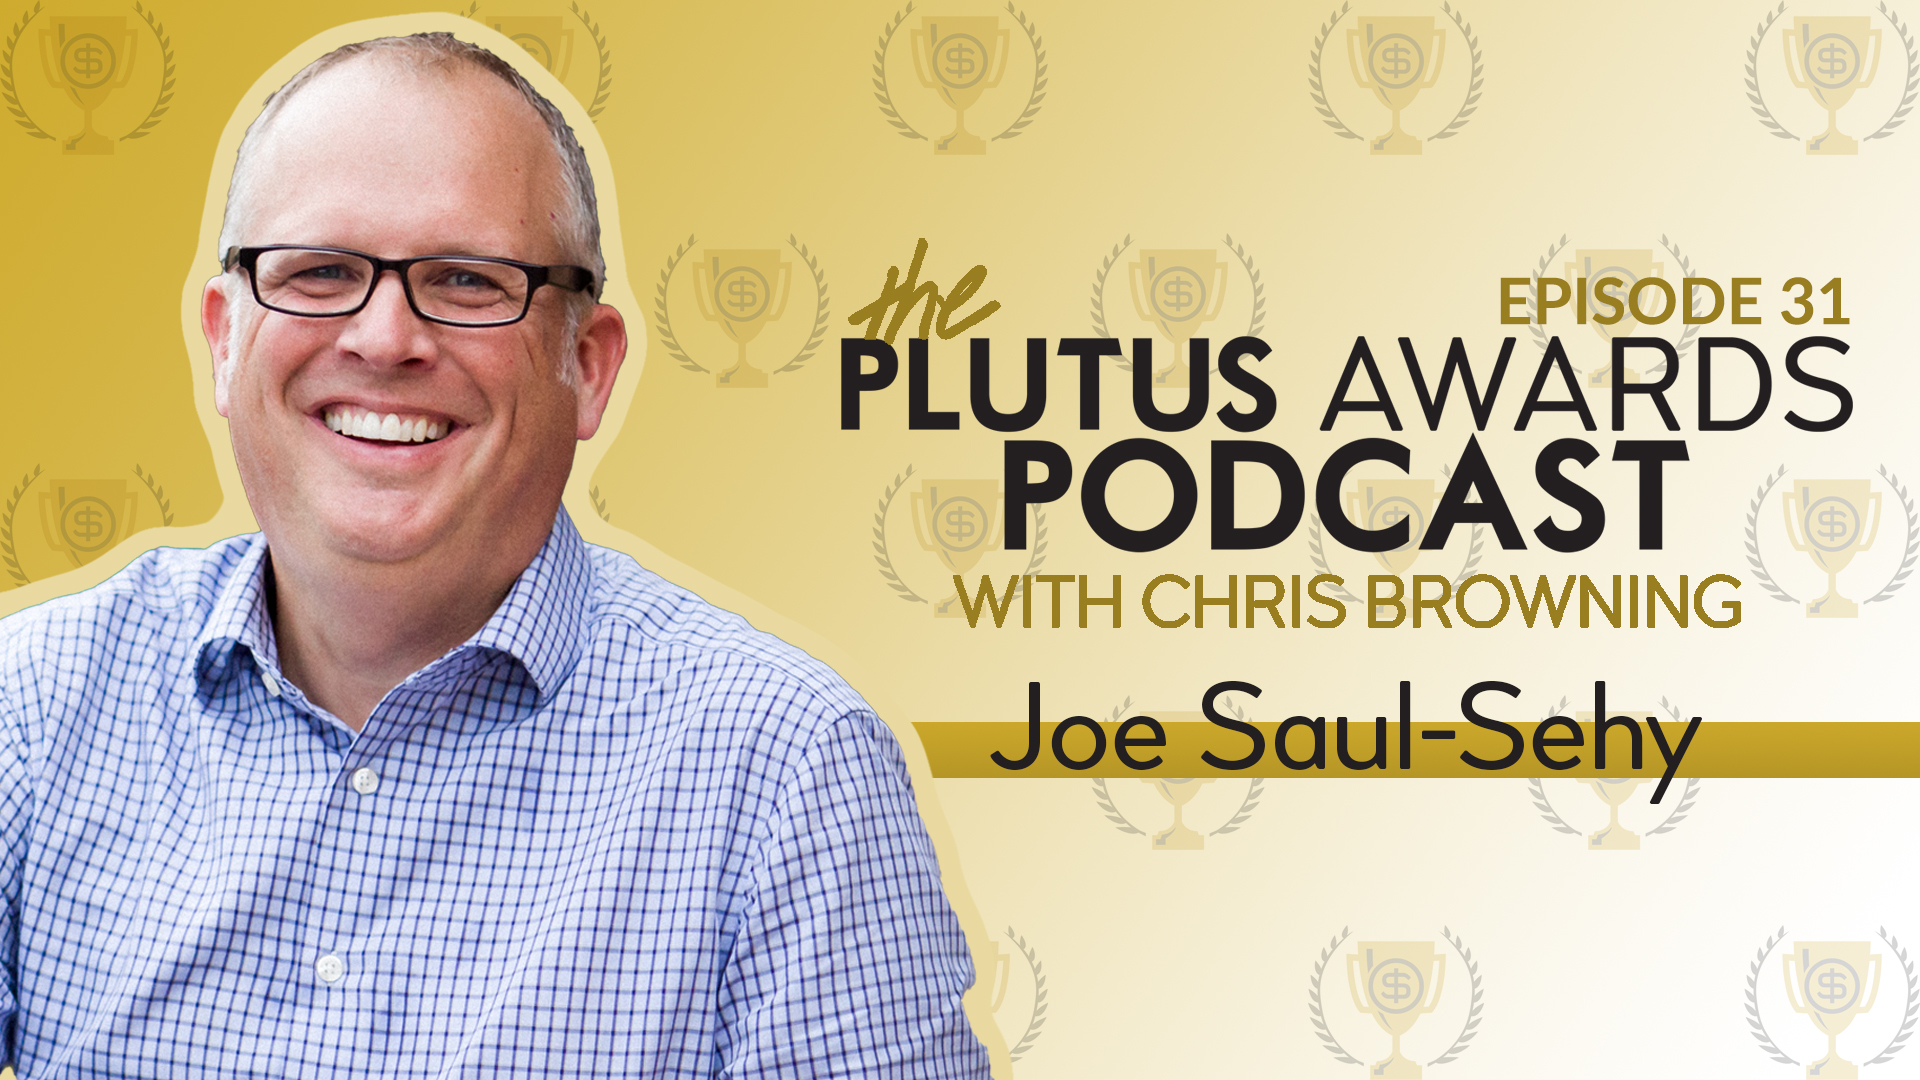 Joe Saul-Sehy Plutus Awards Podcast Featured Image